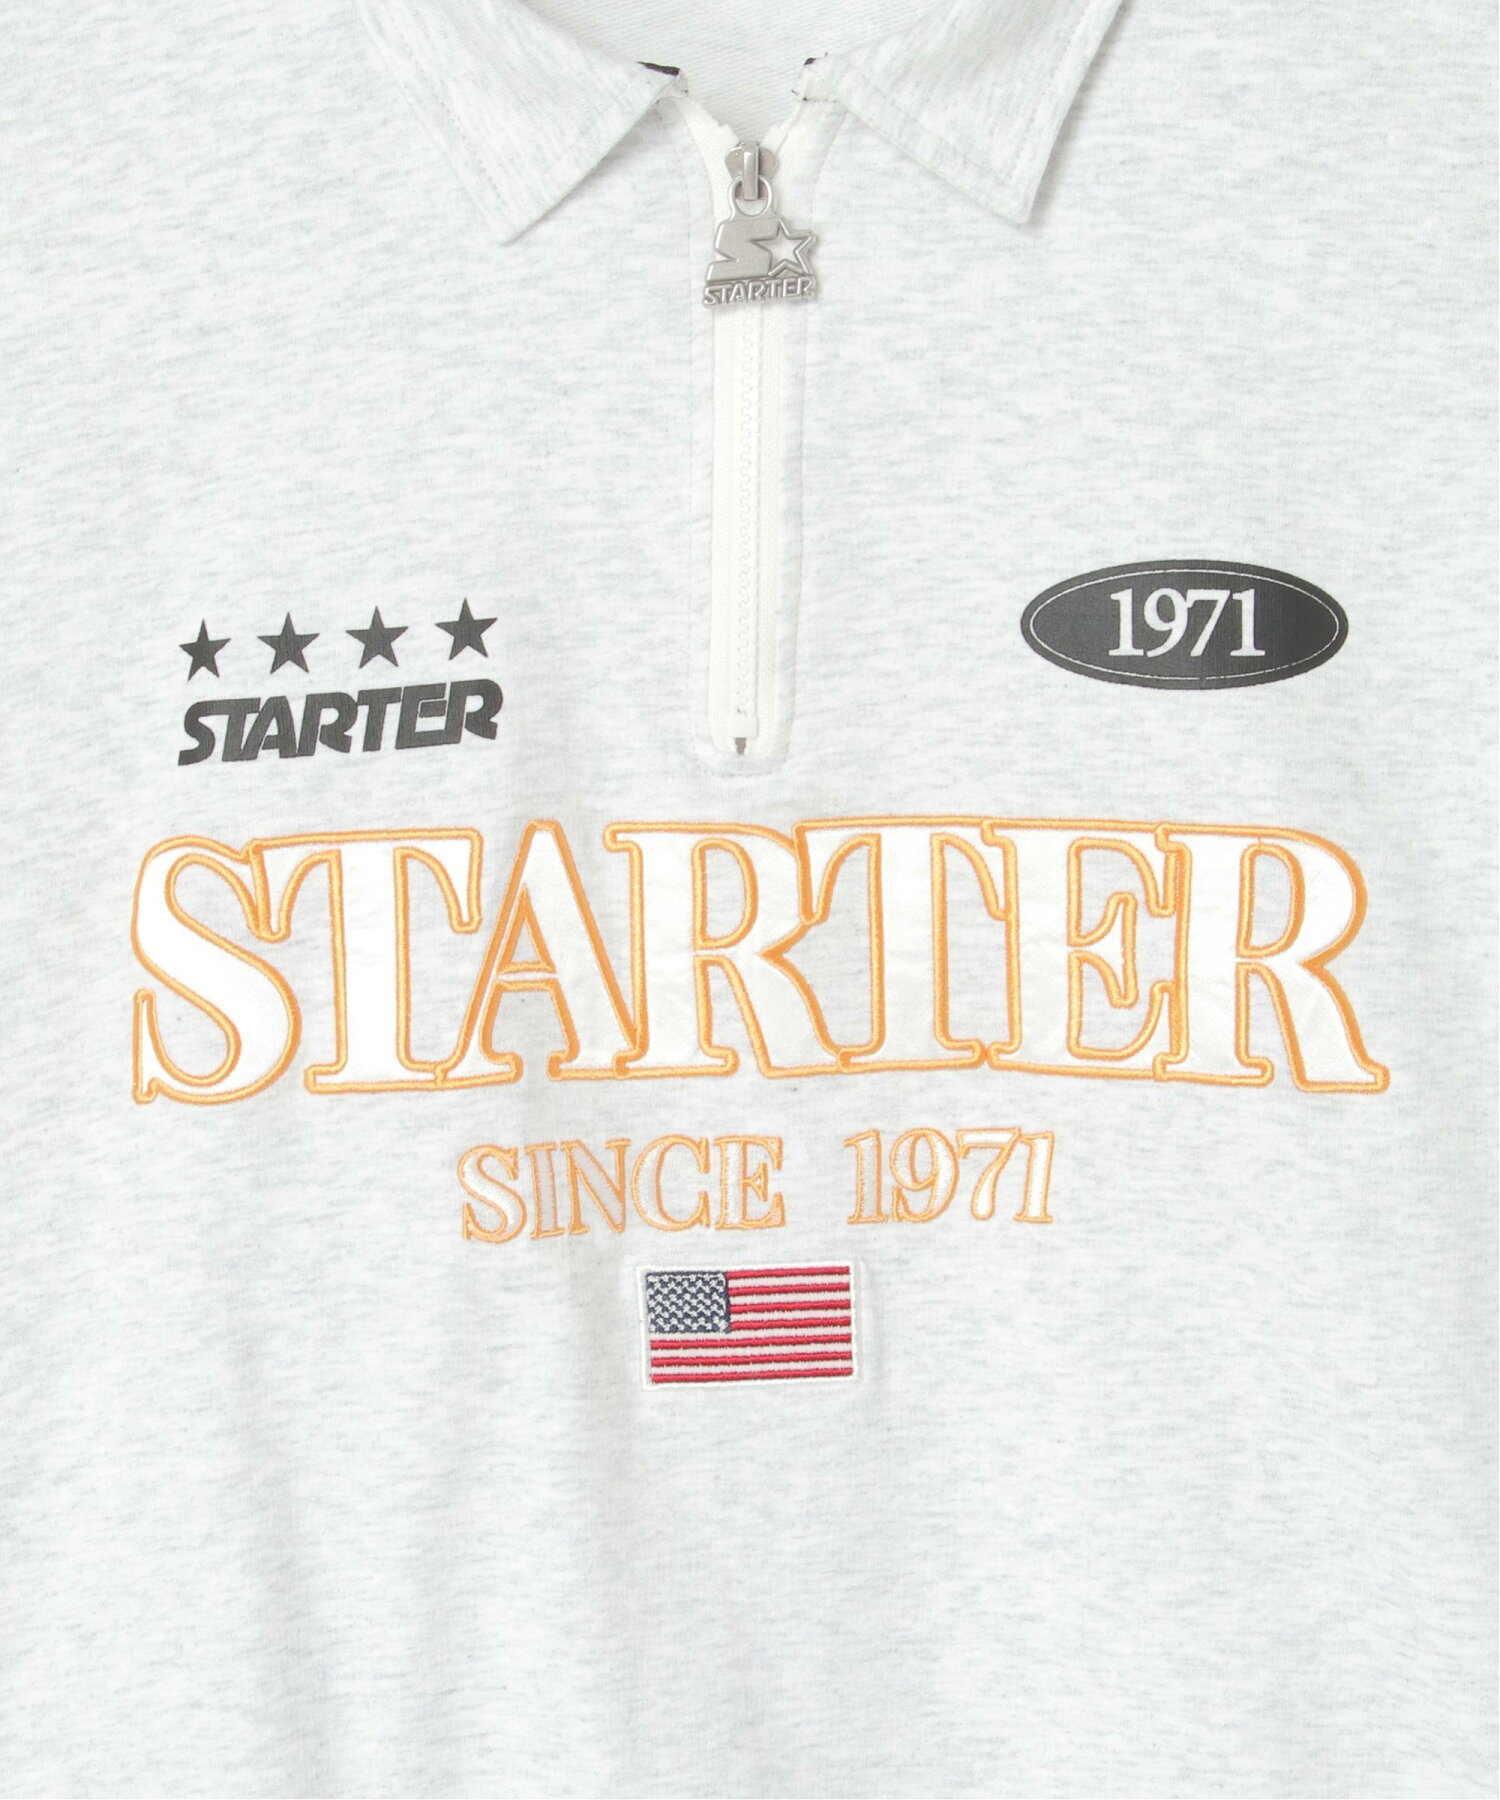 STARTER BLACK LABEL スターターブラックレーベル ハーフジップTシャツ